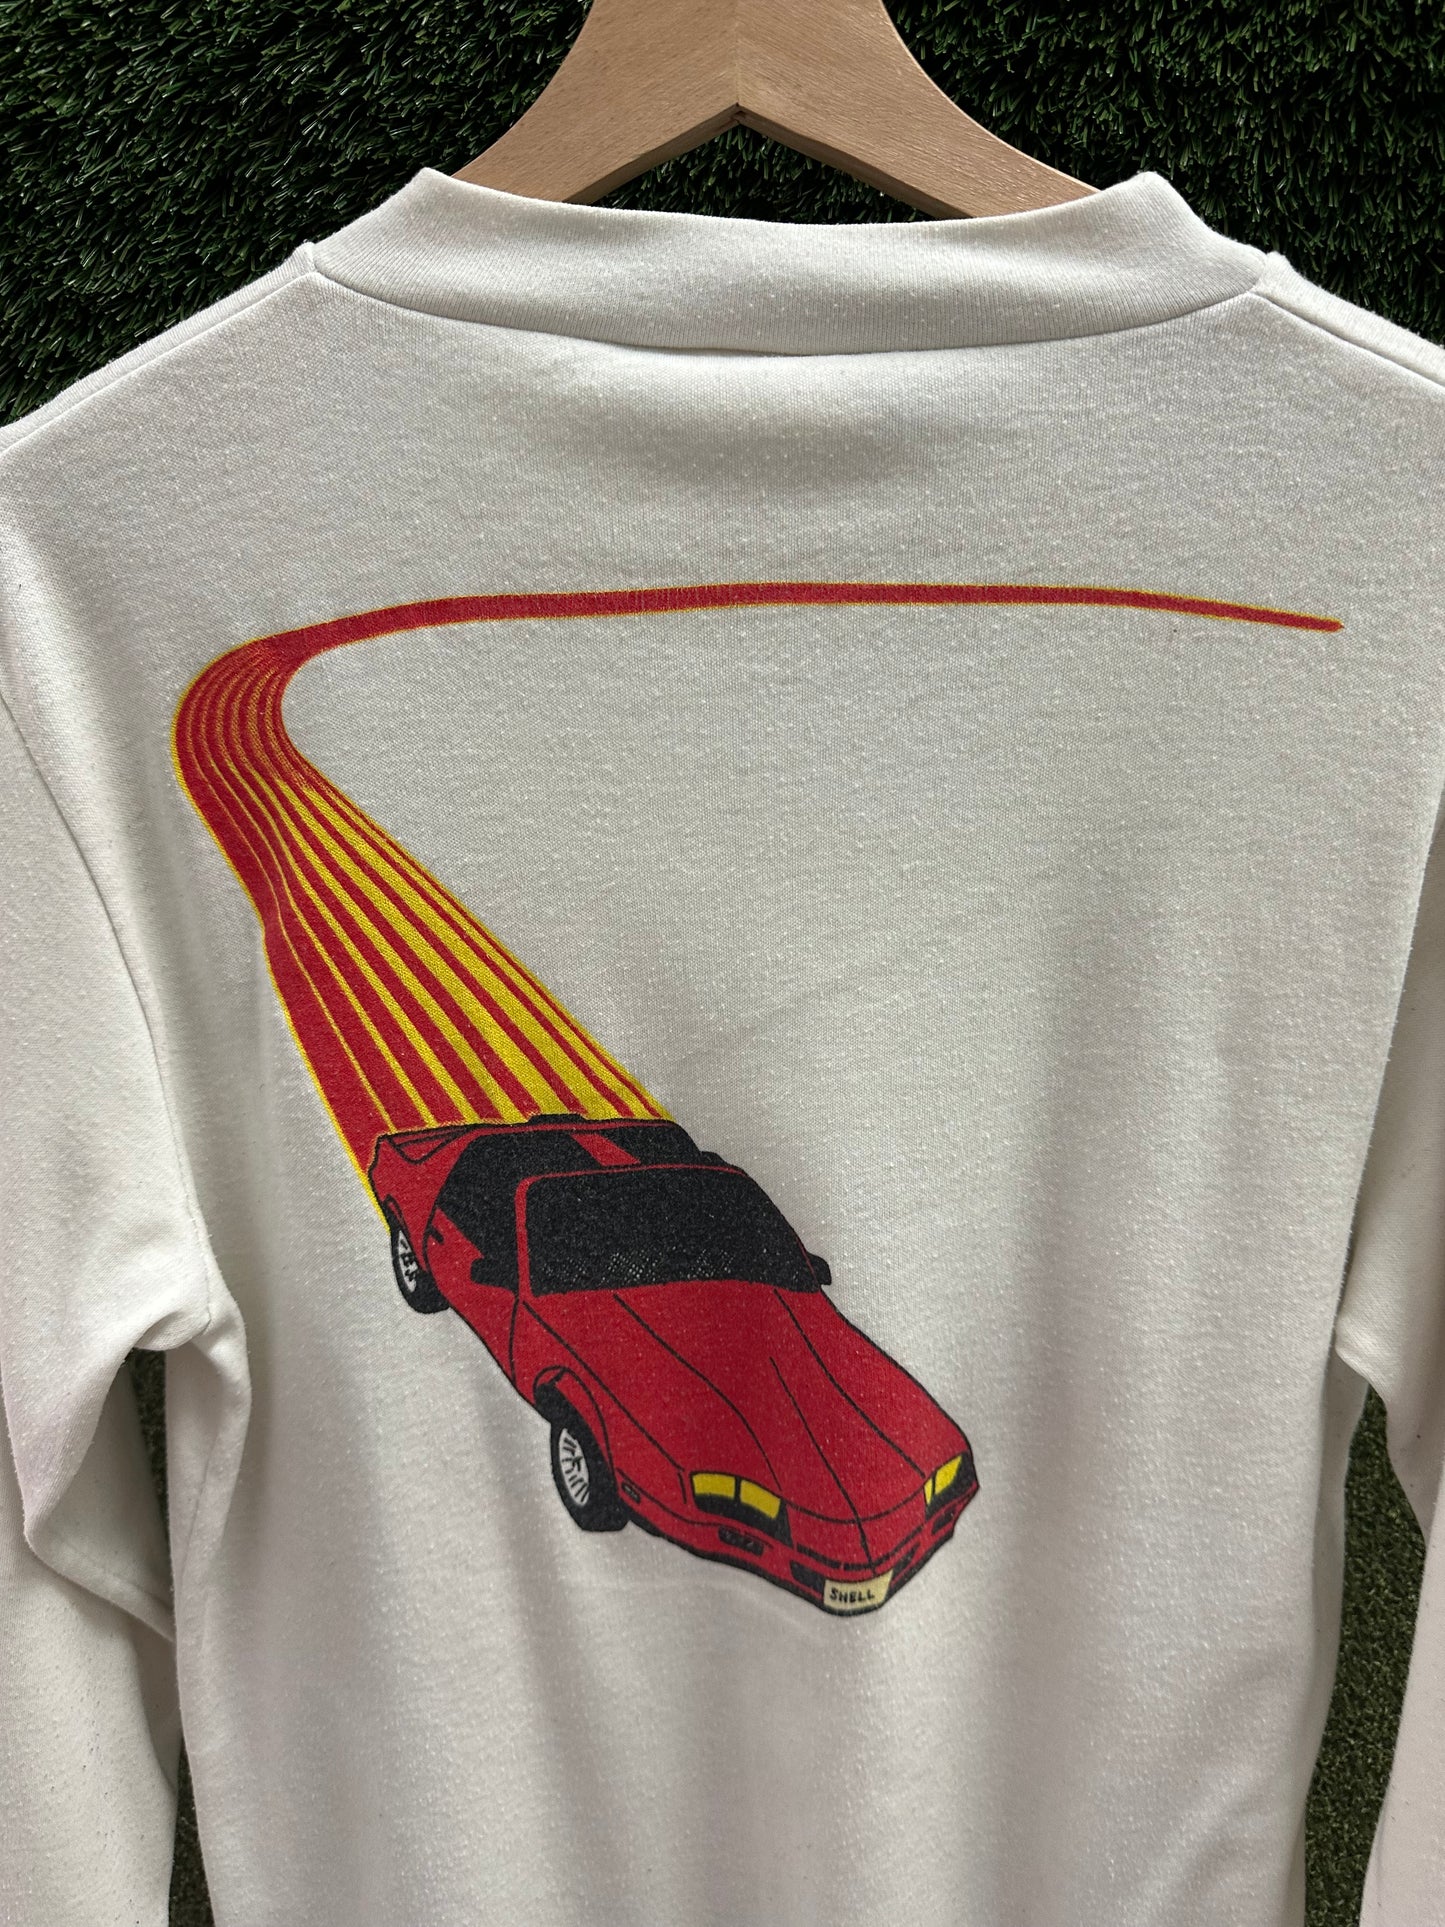 Vintage 1980s Shell Gasoline Race Car Longsleeve T-shirt - M